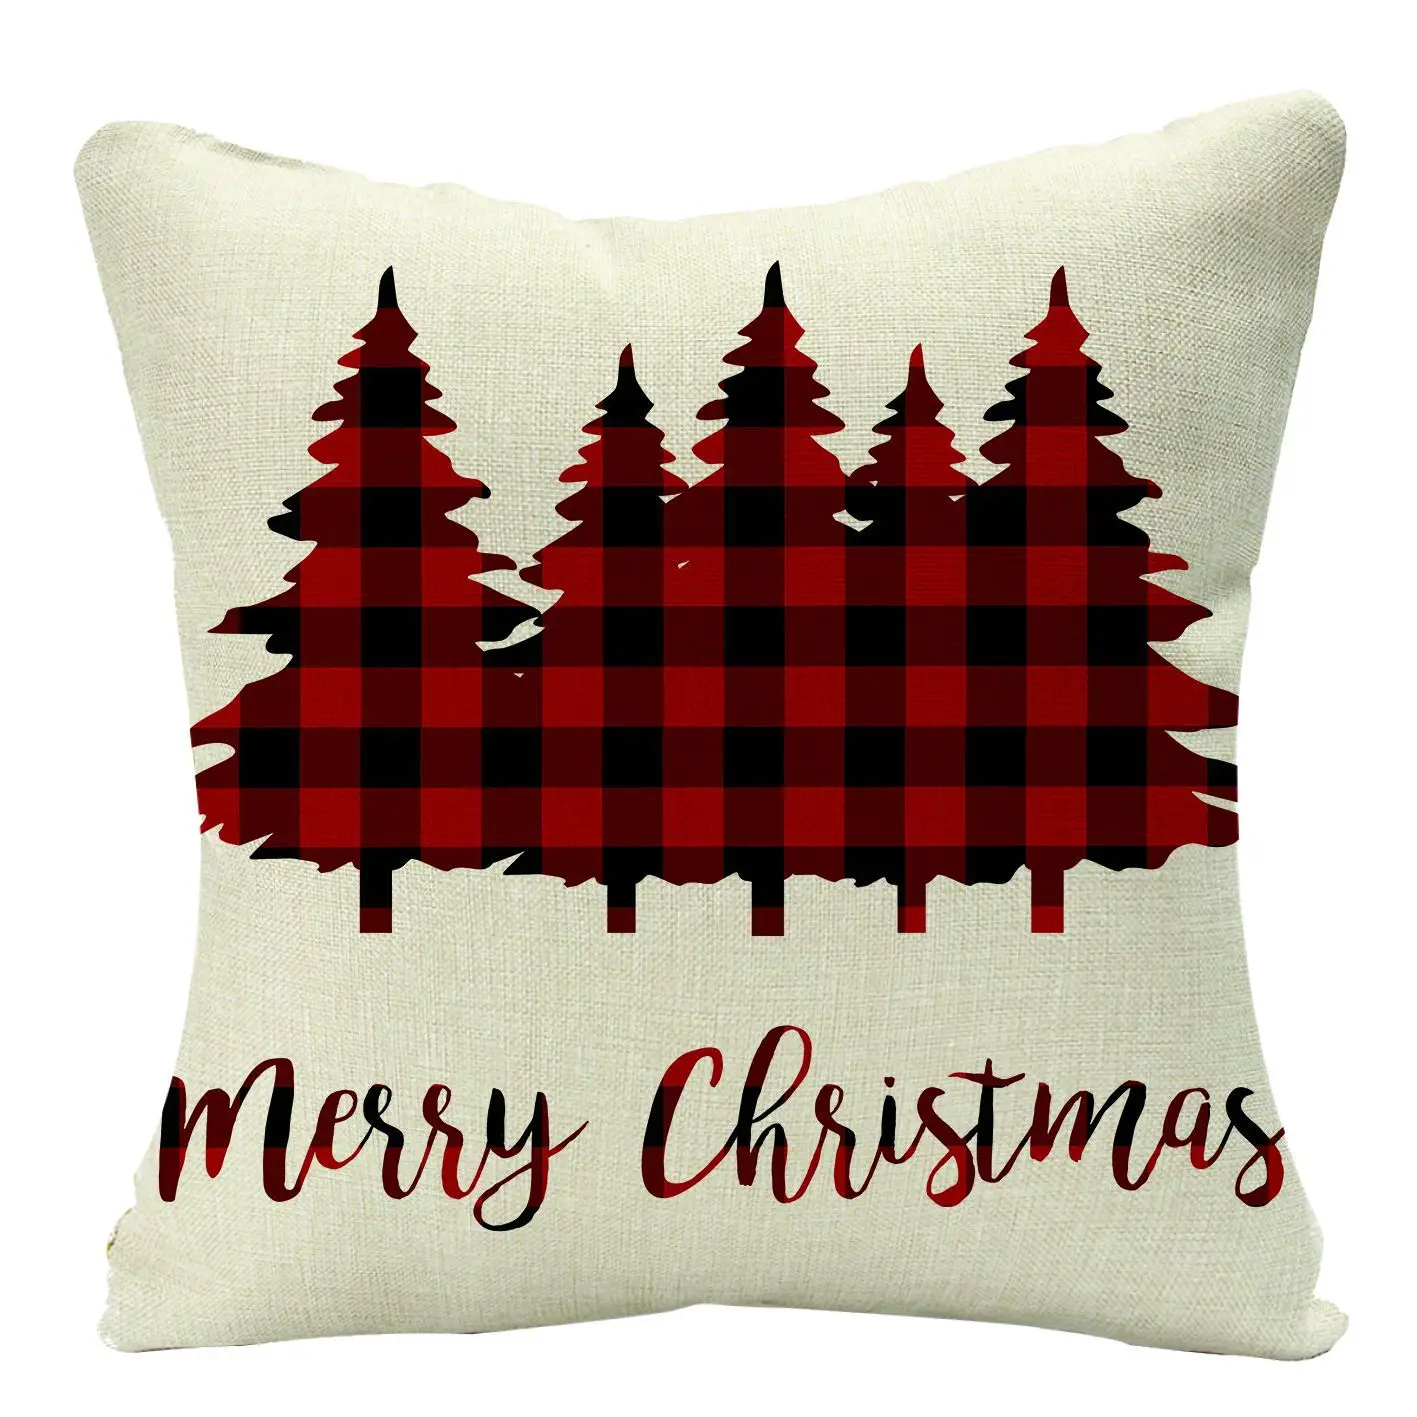 Car 18" Cotton Case Cover Pillow Decorative Christmas Cushion Linen Home Tree 